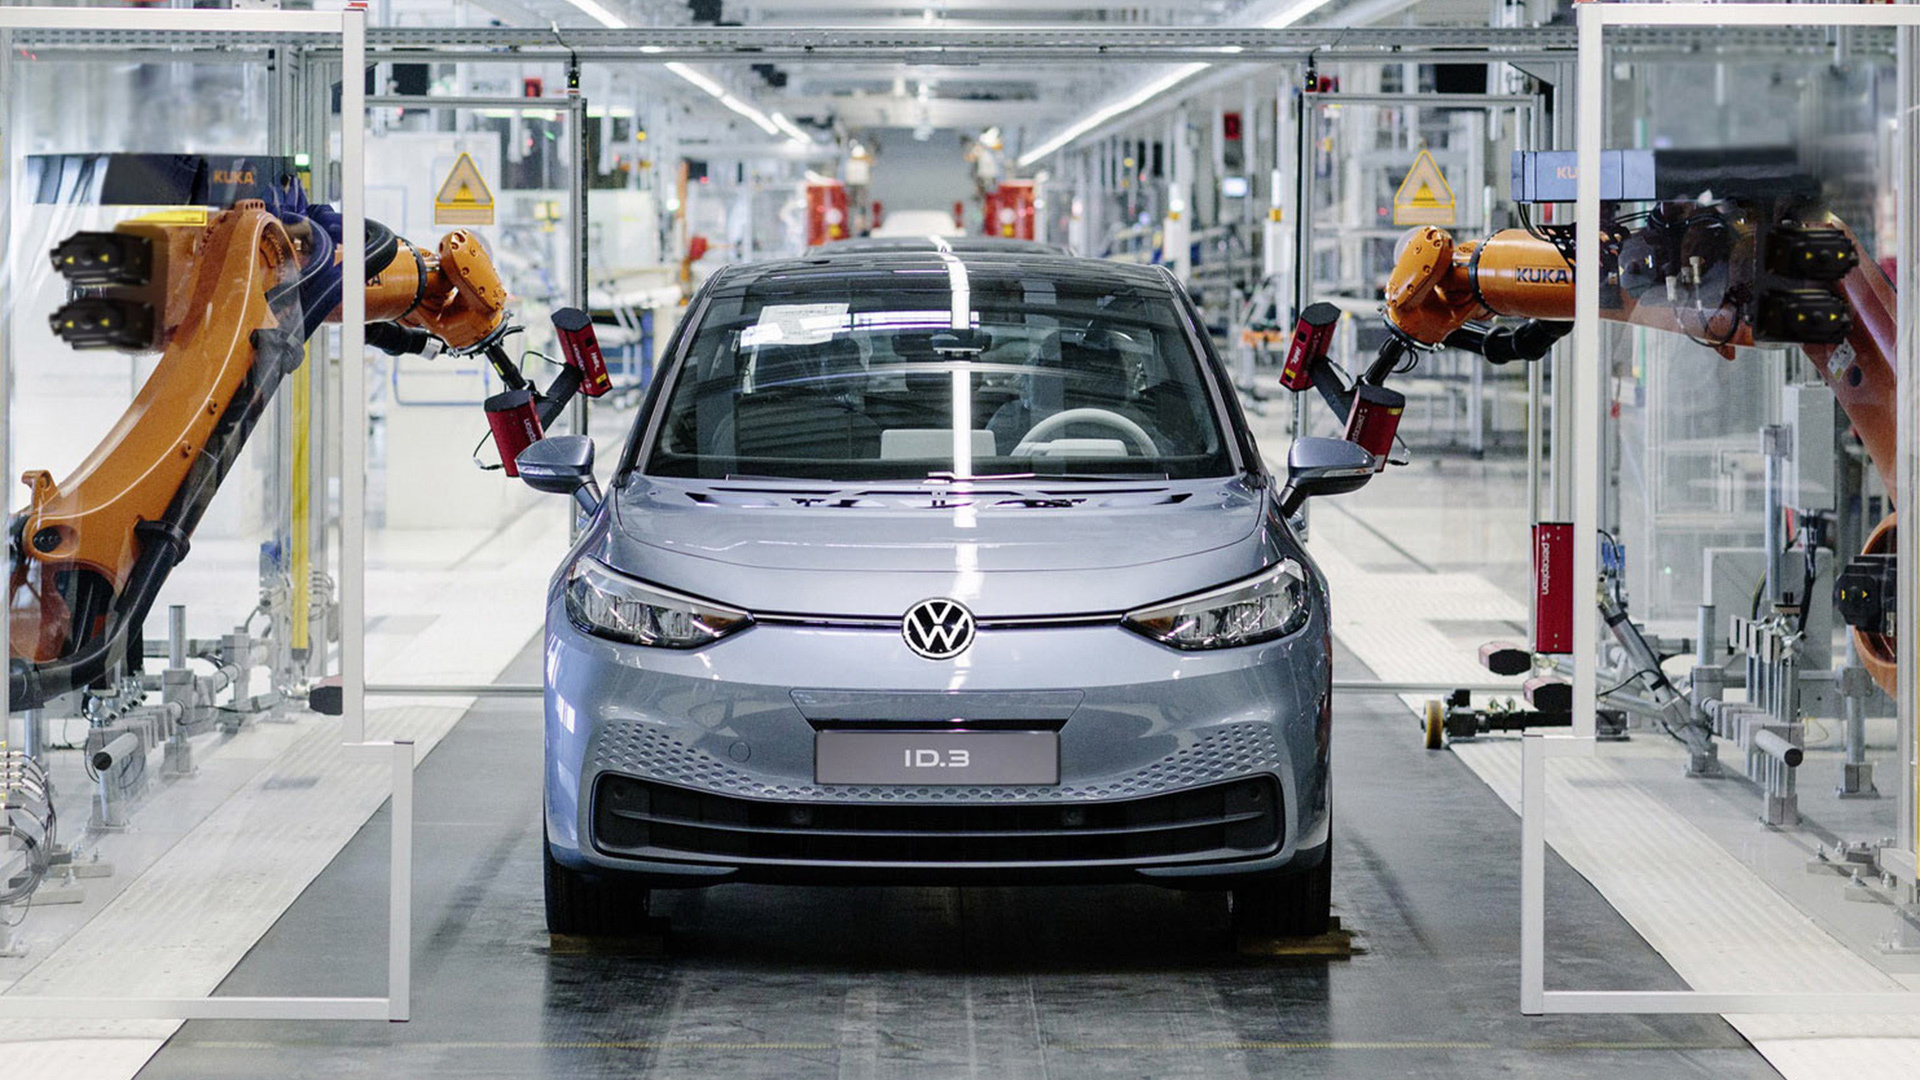 VW's Cupra brand begins market tests for possible U.S. debut